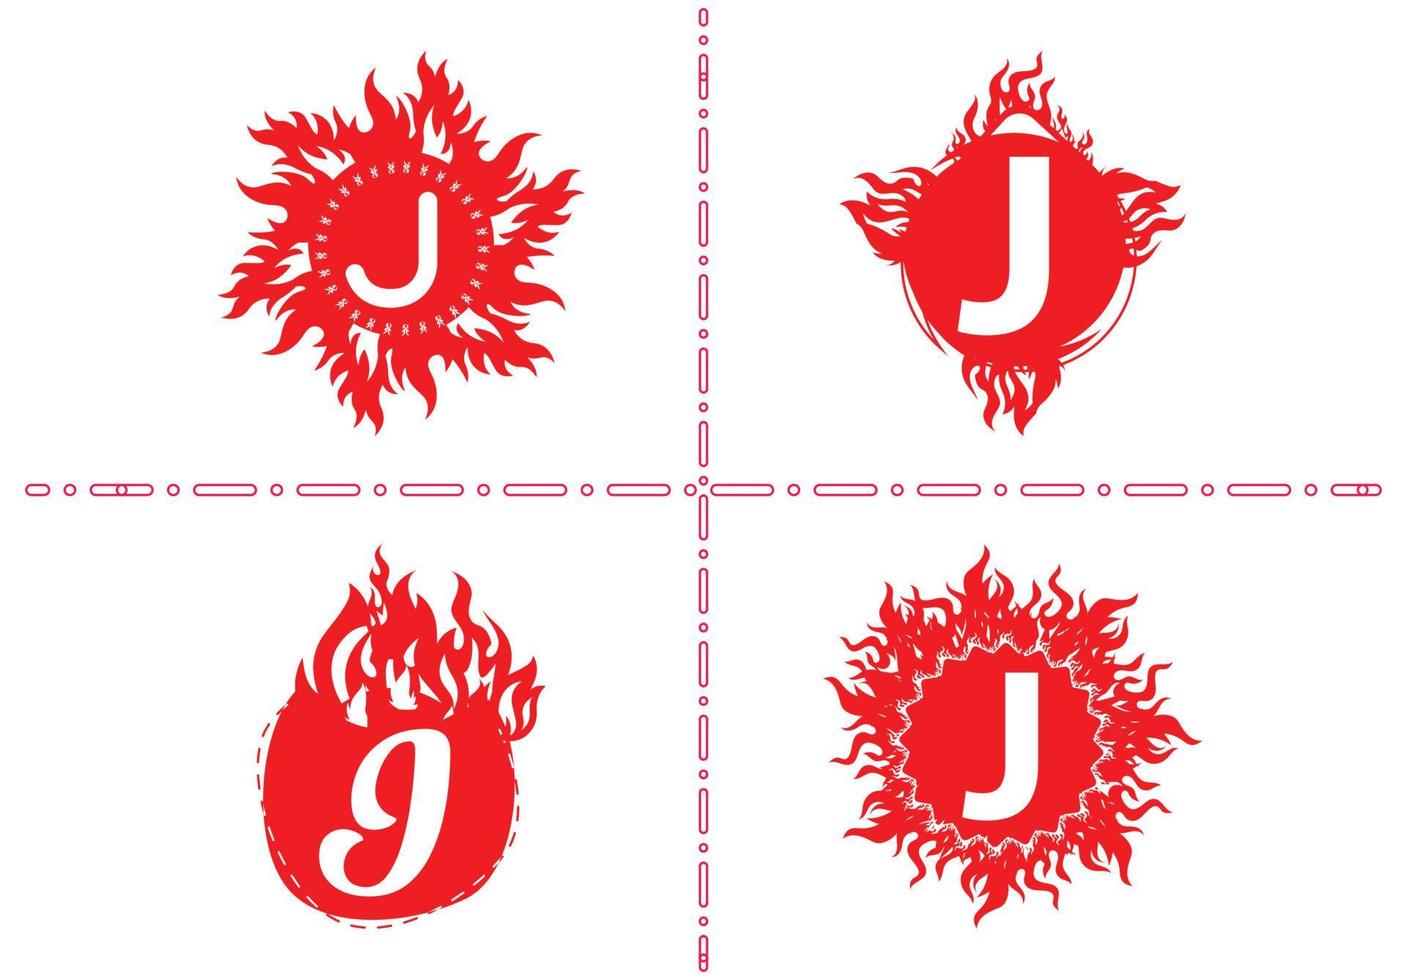 brand j letter logo en pictogram ontwerpsjabloon vector